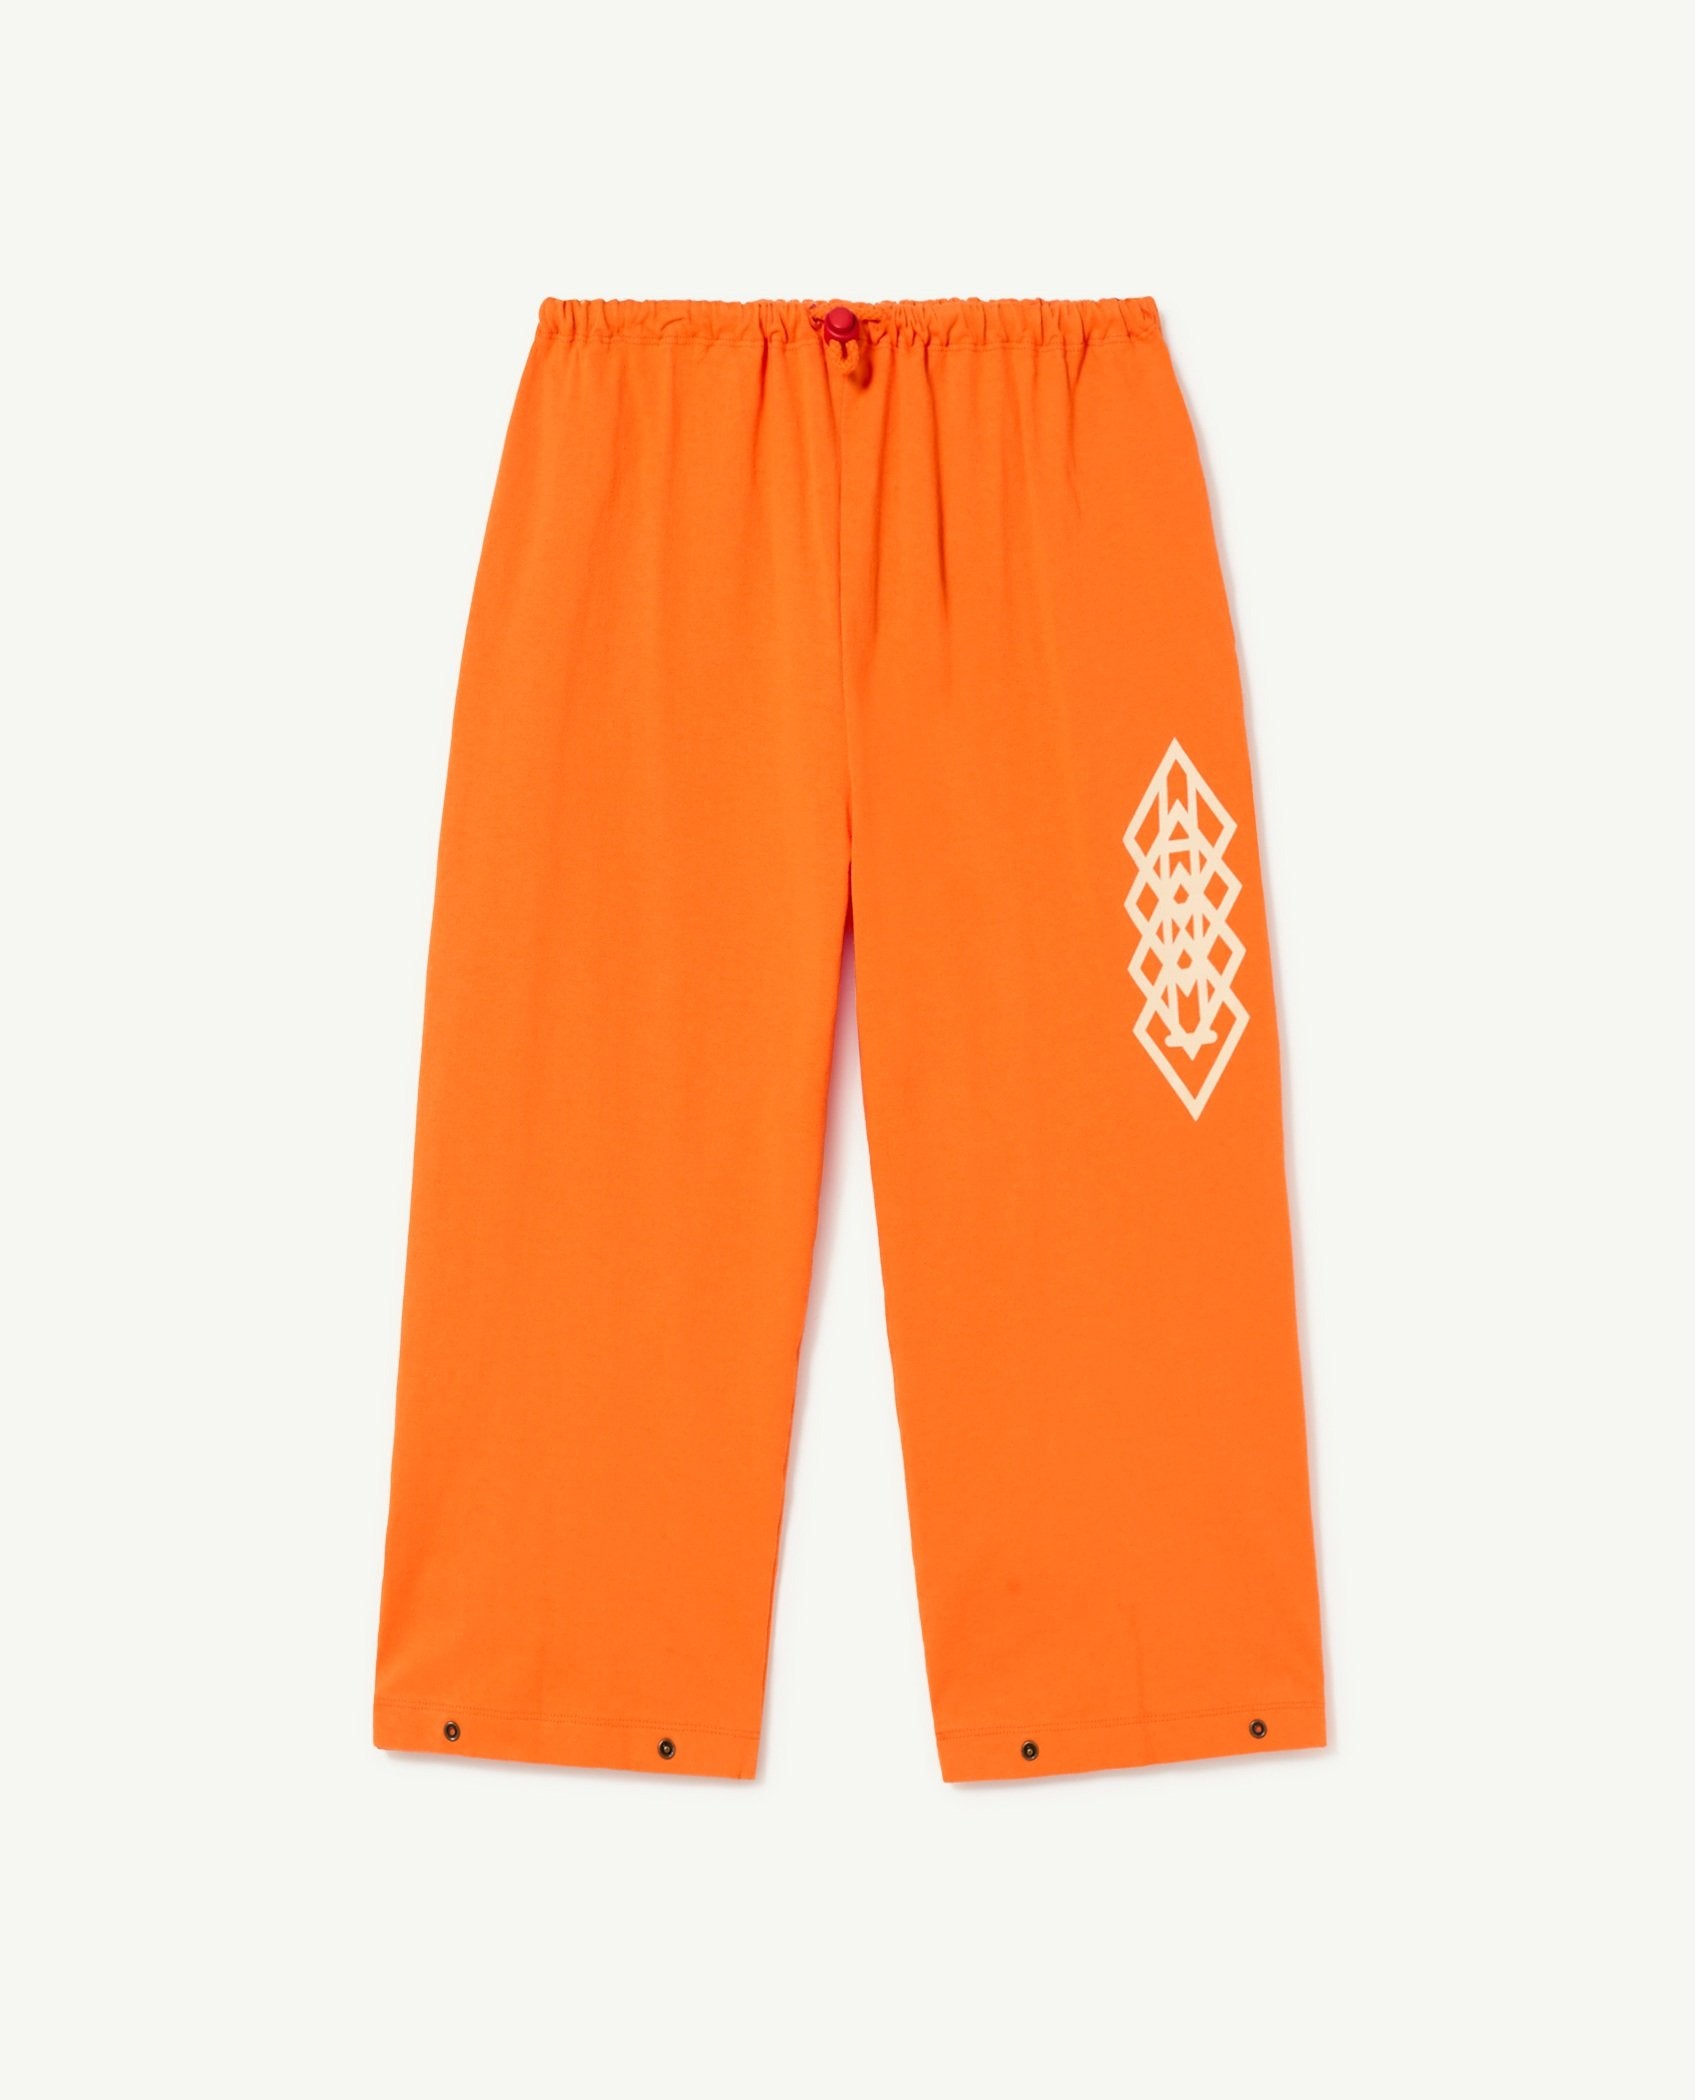 Orange Stag Sweatpants PRODUCT FRONT